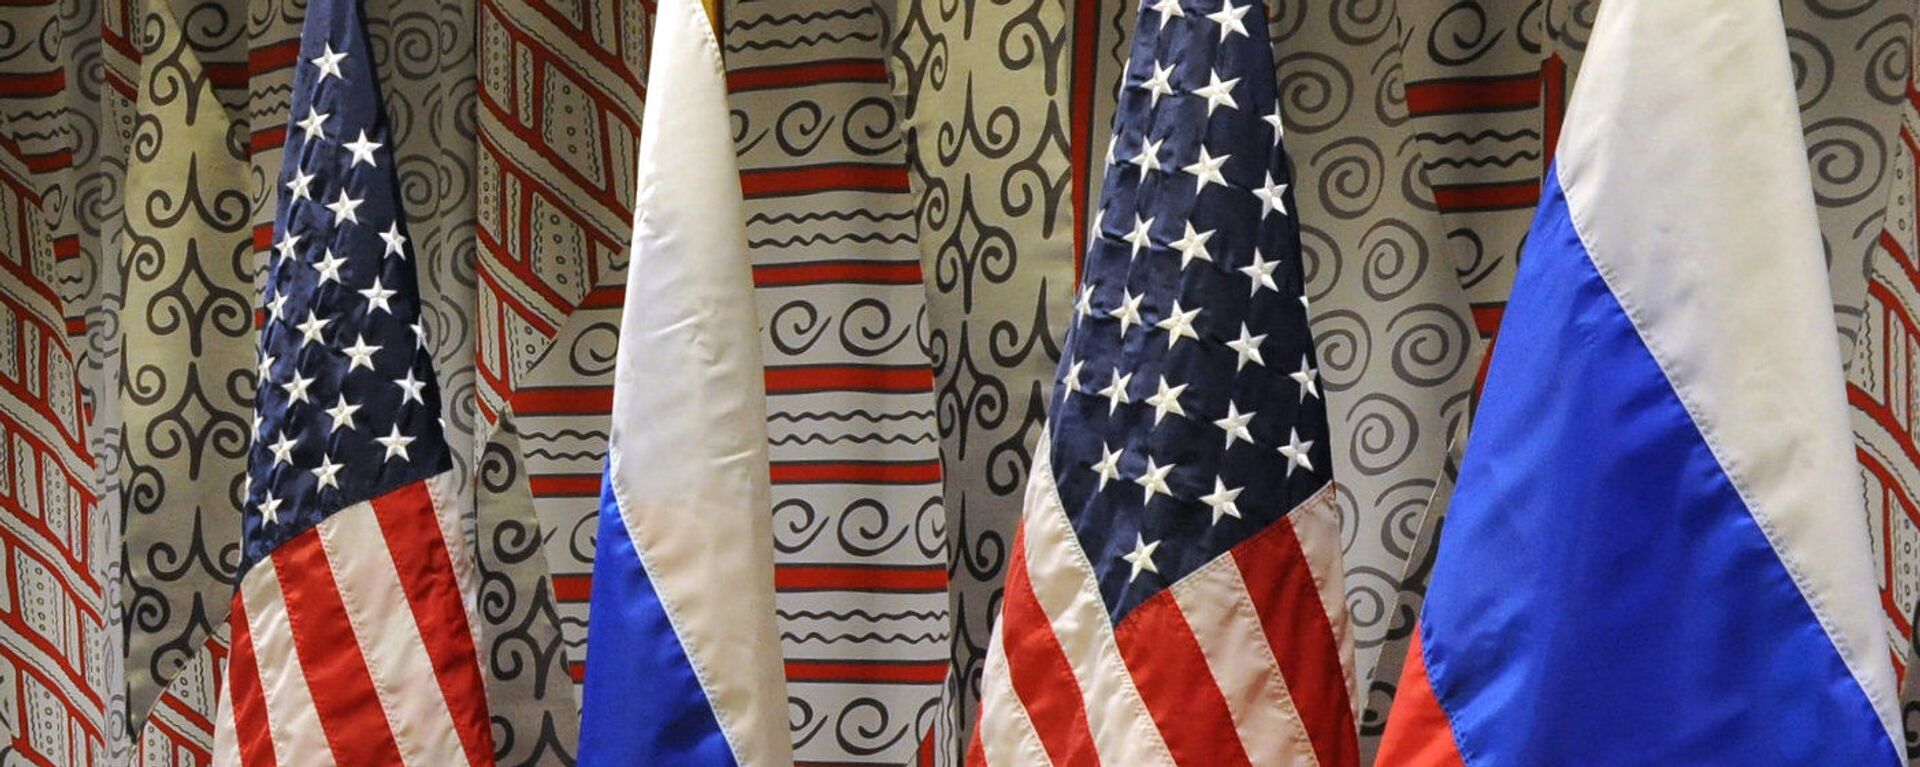 Флаги России и США - Sputnik Latvija, 1920, 19.05.2021